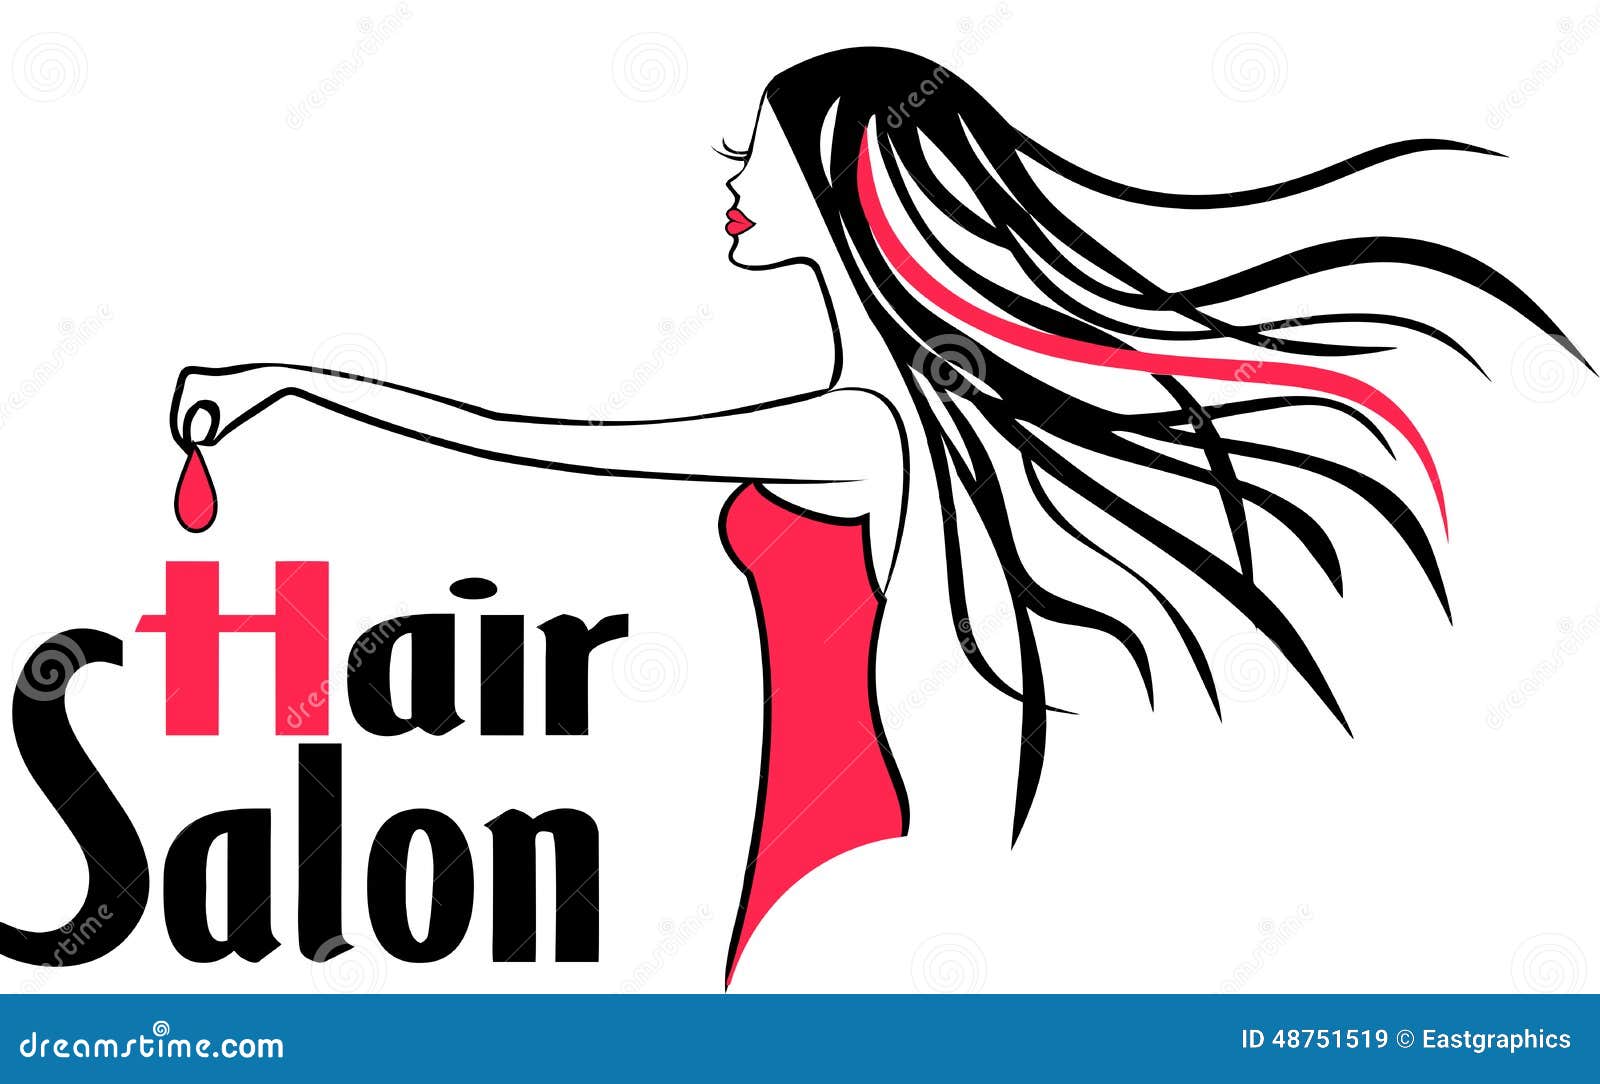 Black Hair Salon Logo Stock Illustrations 12 403 Black Hair Salon Logo Stock Illustrations Vectors Clipart Dreamstime